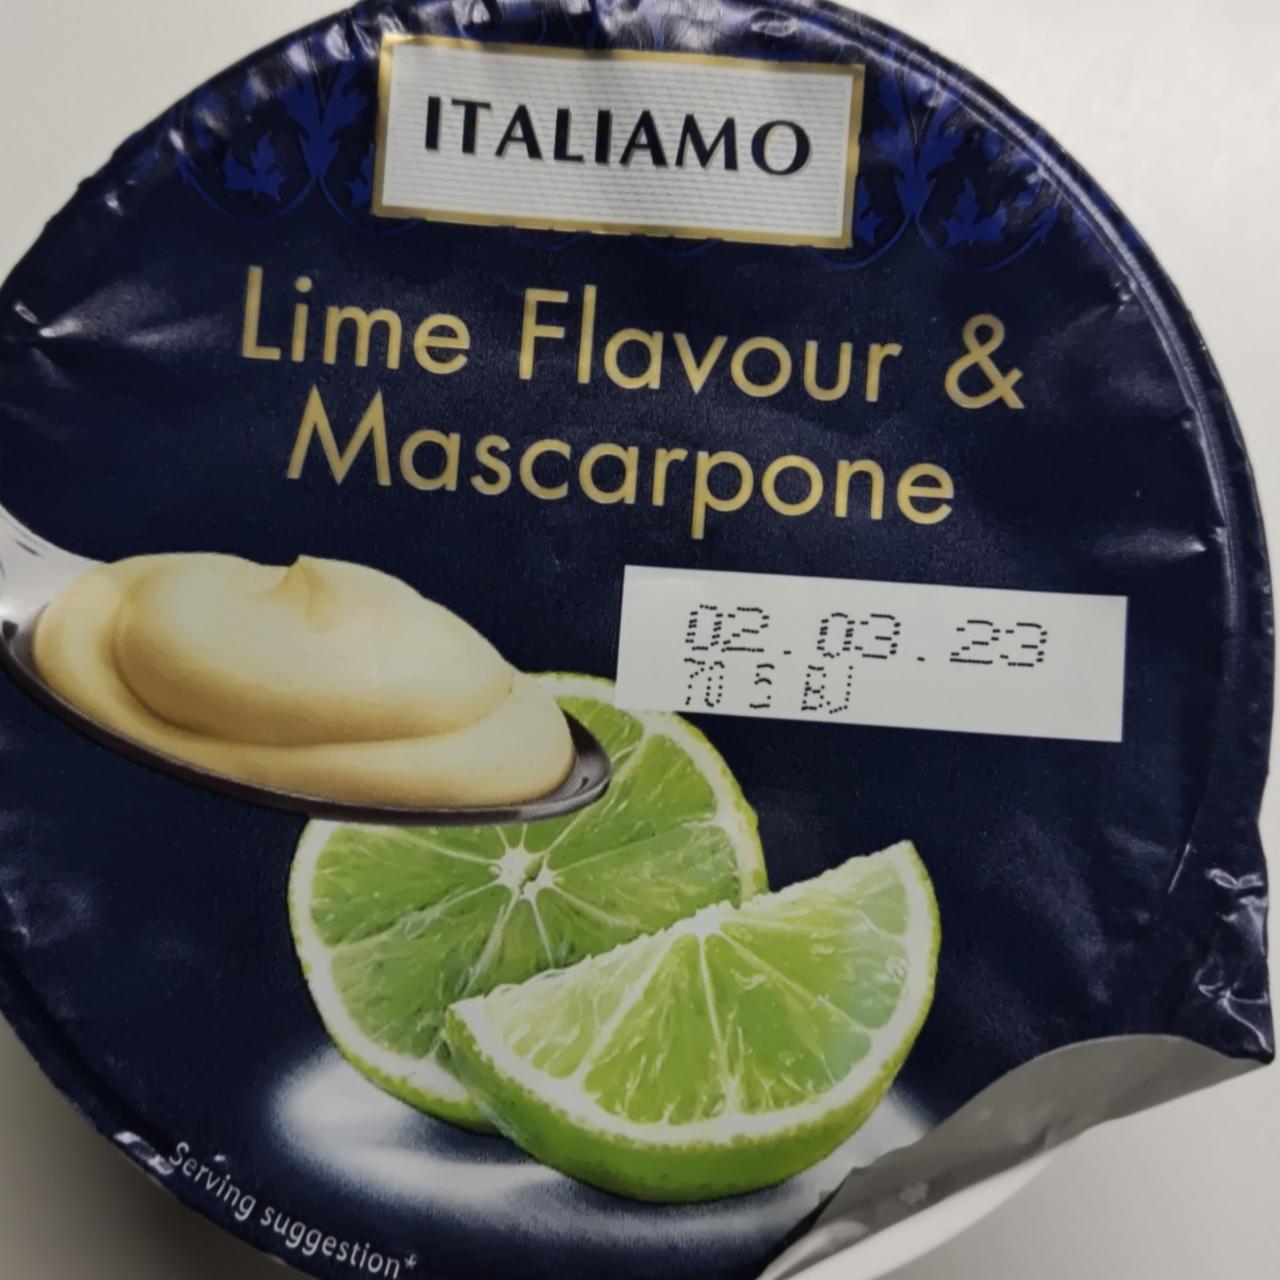 Képek - Lime & mascarpone Italiamo